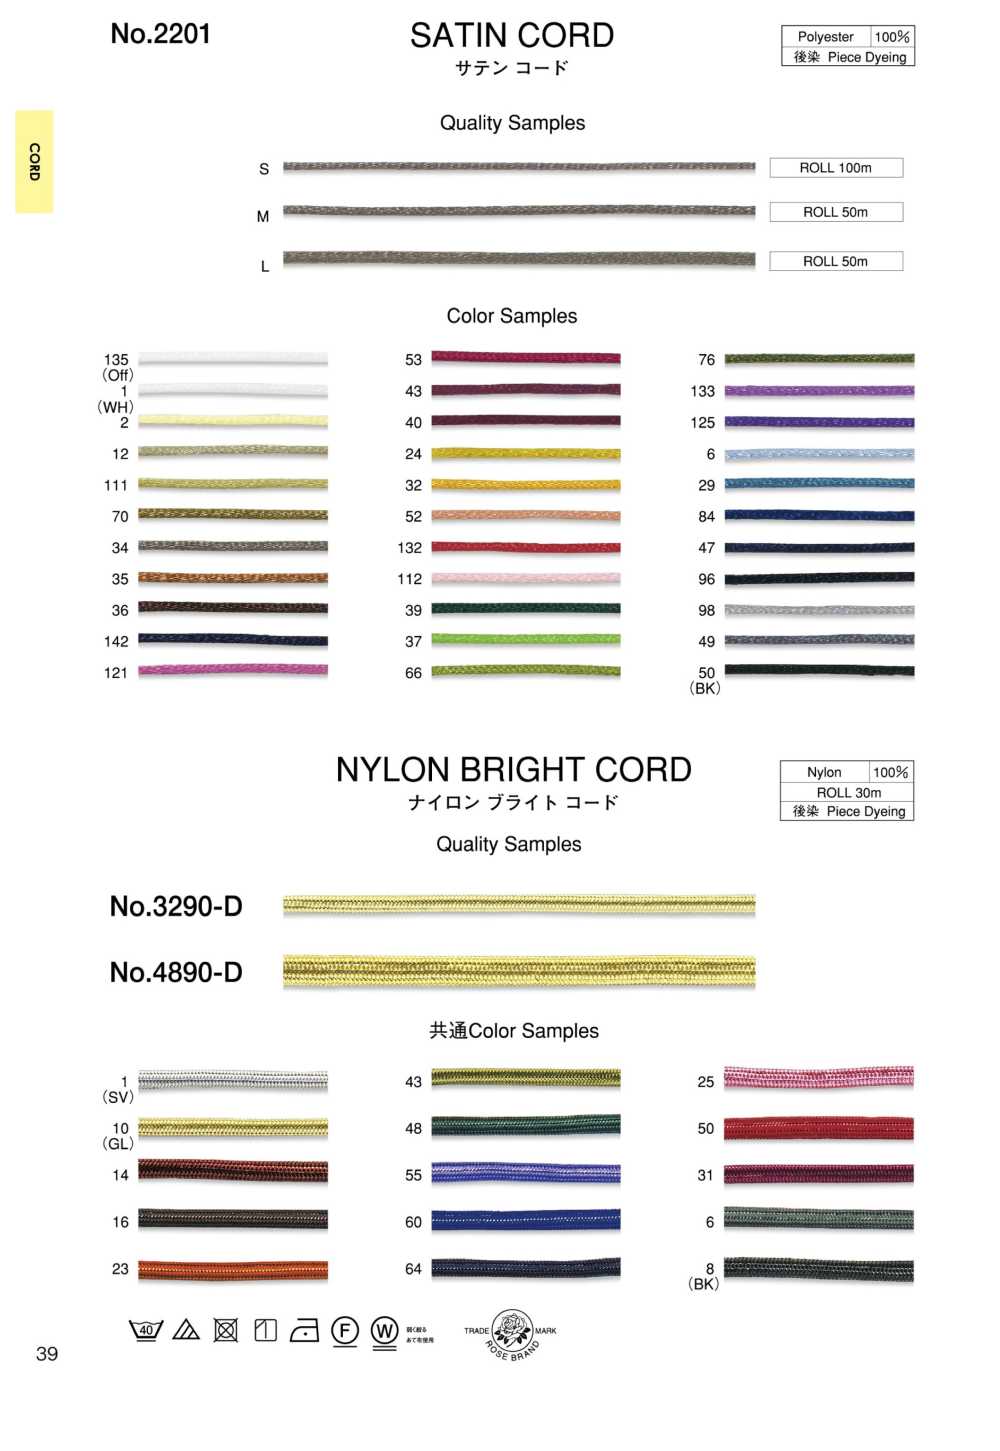 4890-D Nylon Bright Cord[Ribbon Tape Cord] ROSE BRAND (Marushin)